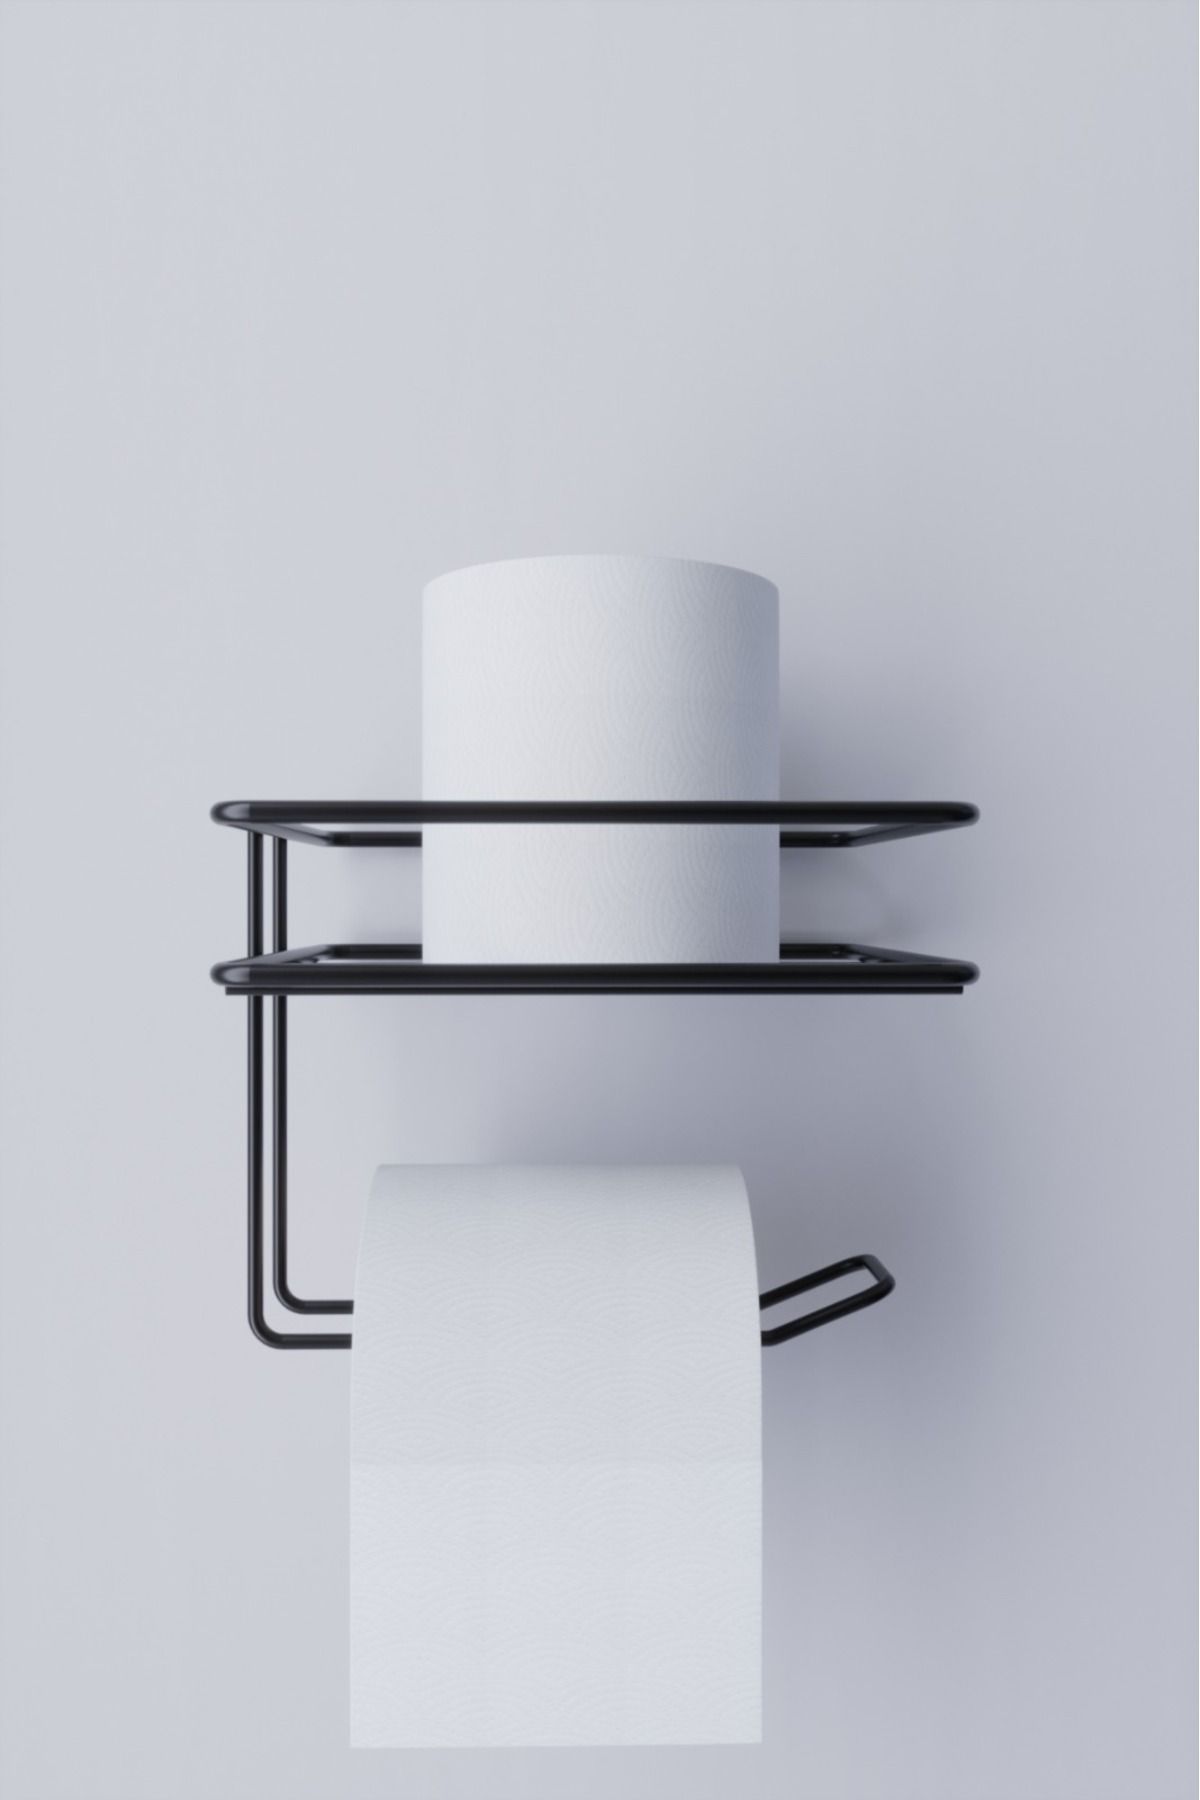 boz concept home Süper Yapışkanlı Tuvalet Kağıtlığı Tutacağı Askısı Mat Metal Tuvalet Kağıtlık Banyo Aksesuar